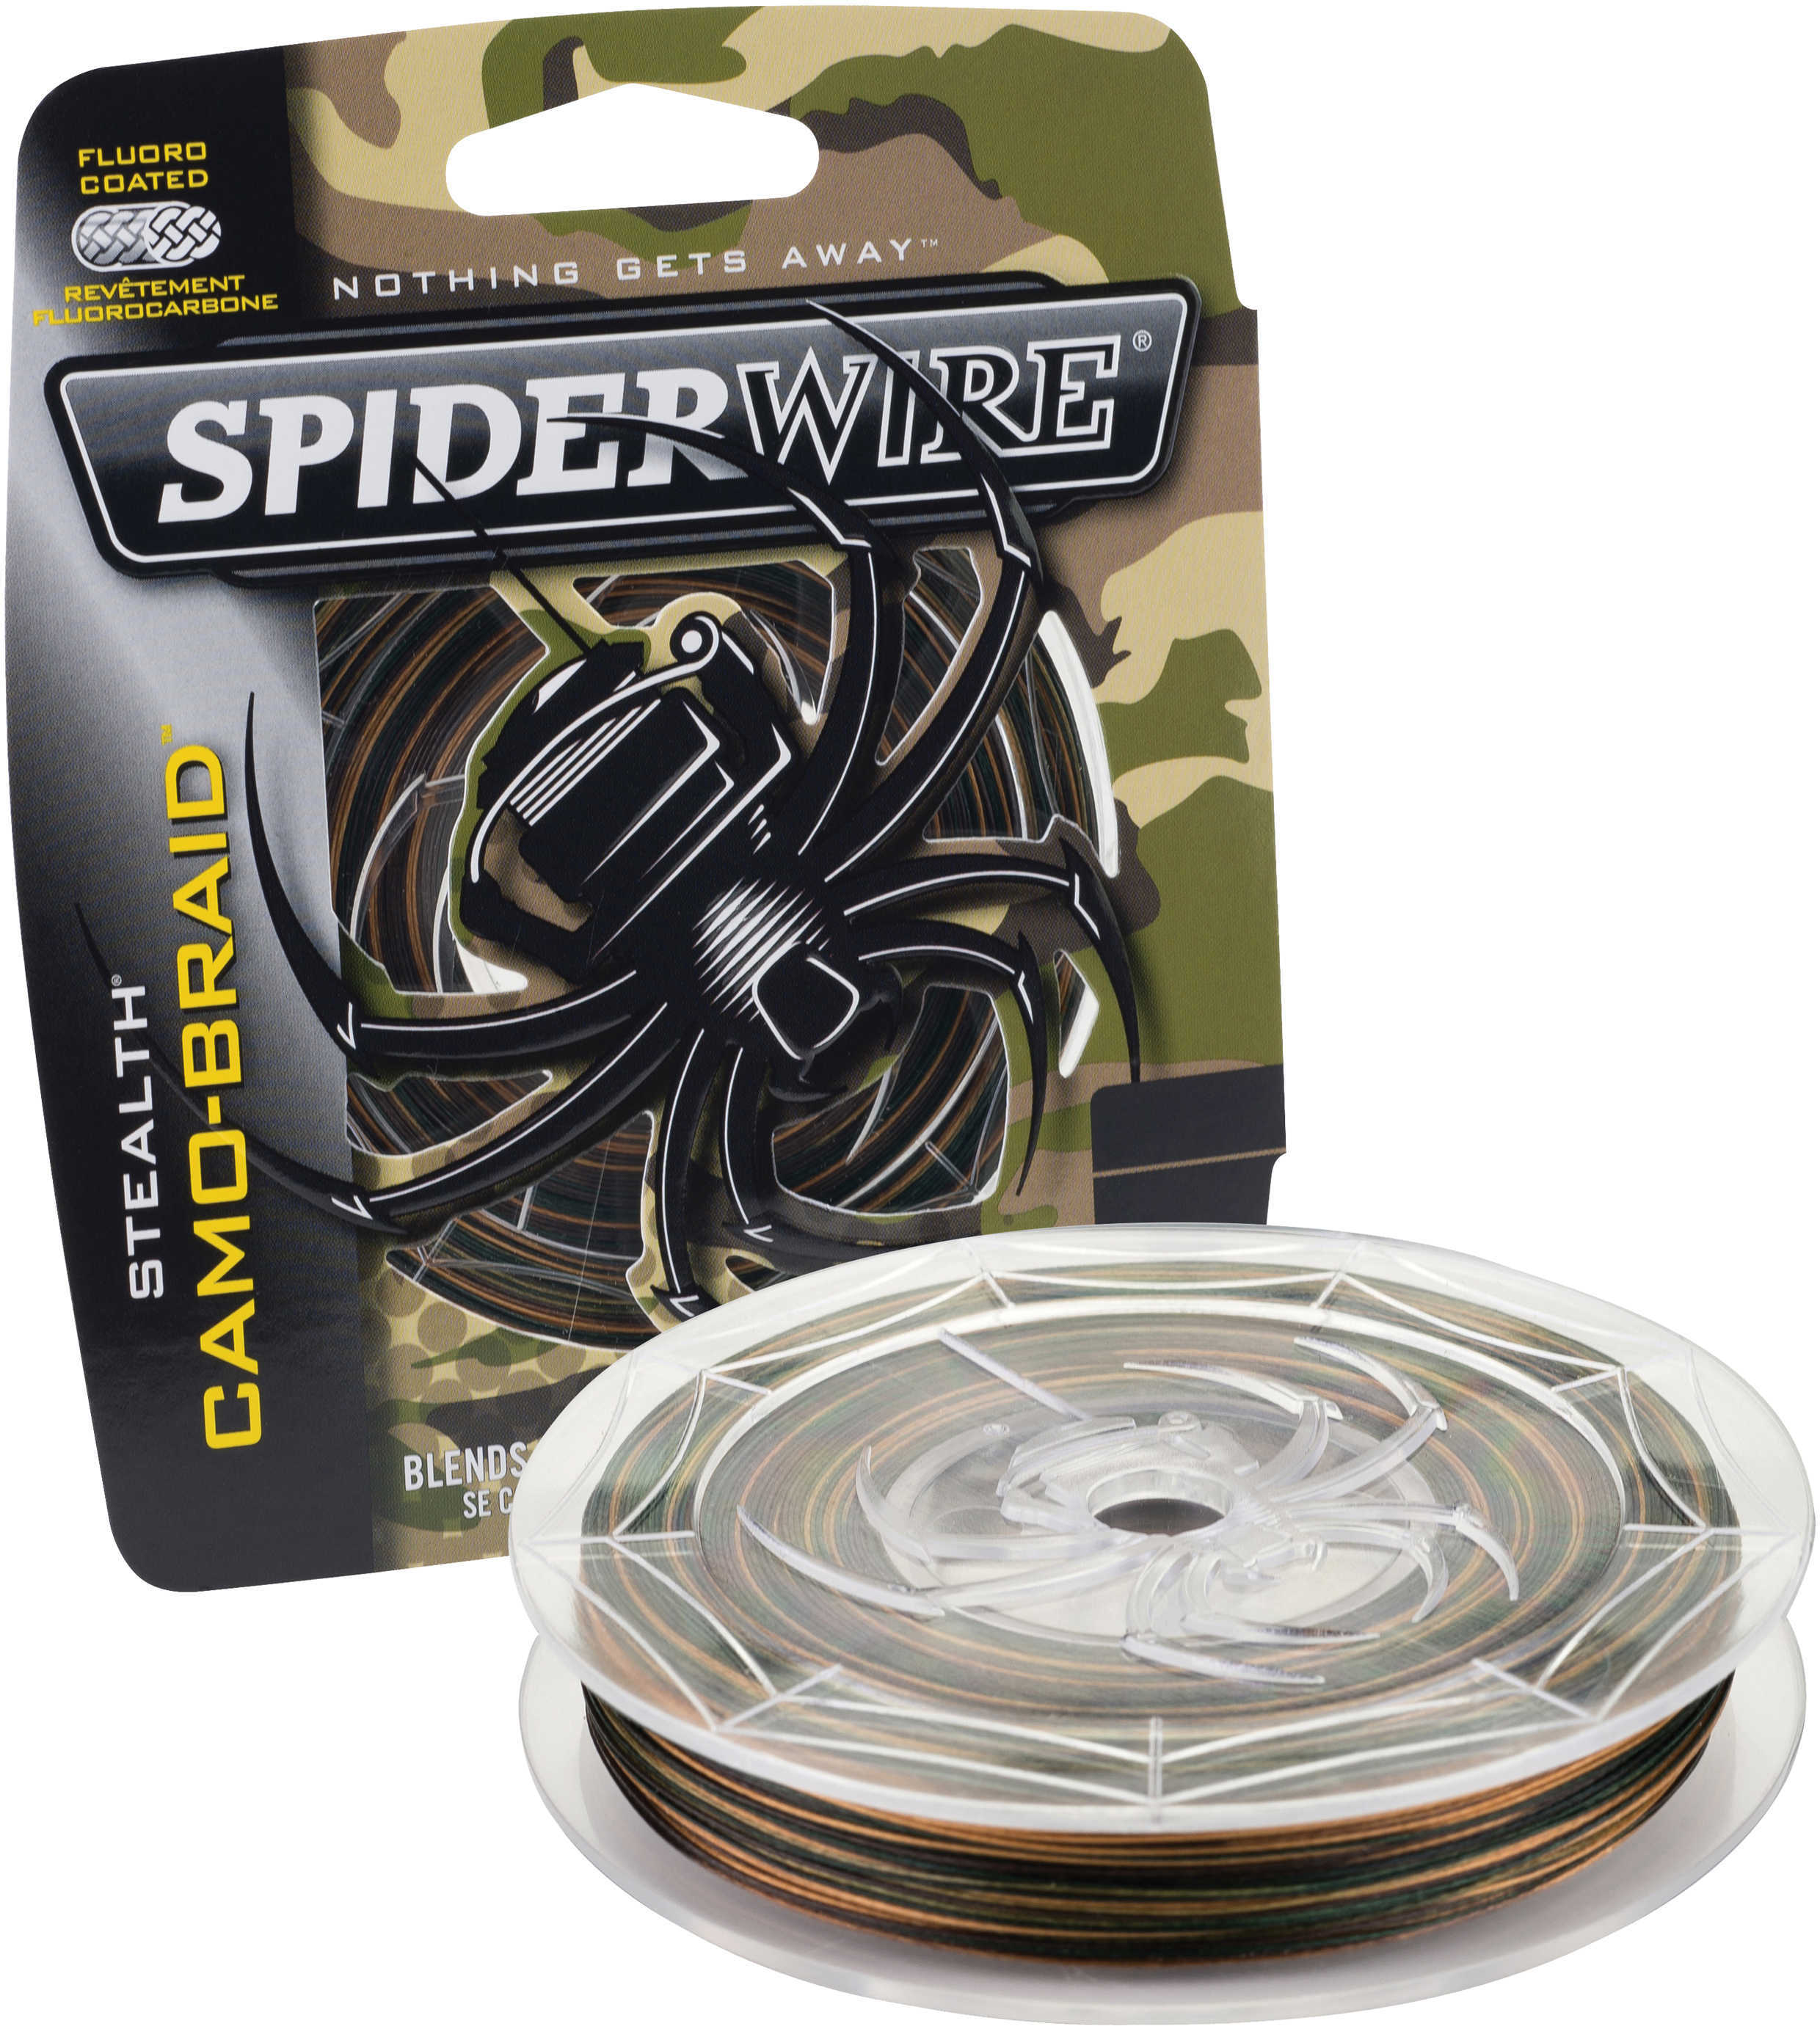 Spiderwire Stealth Braid, Camo 80 lb, 300 Yards Md: 1339799